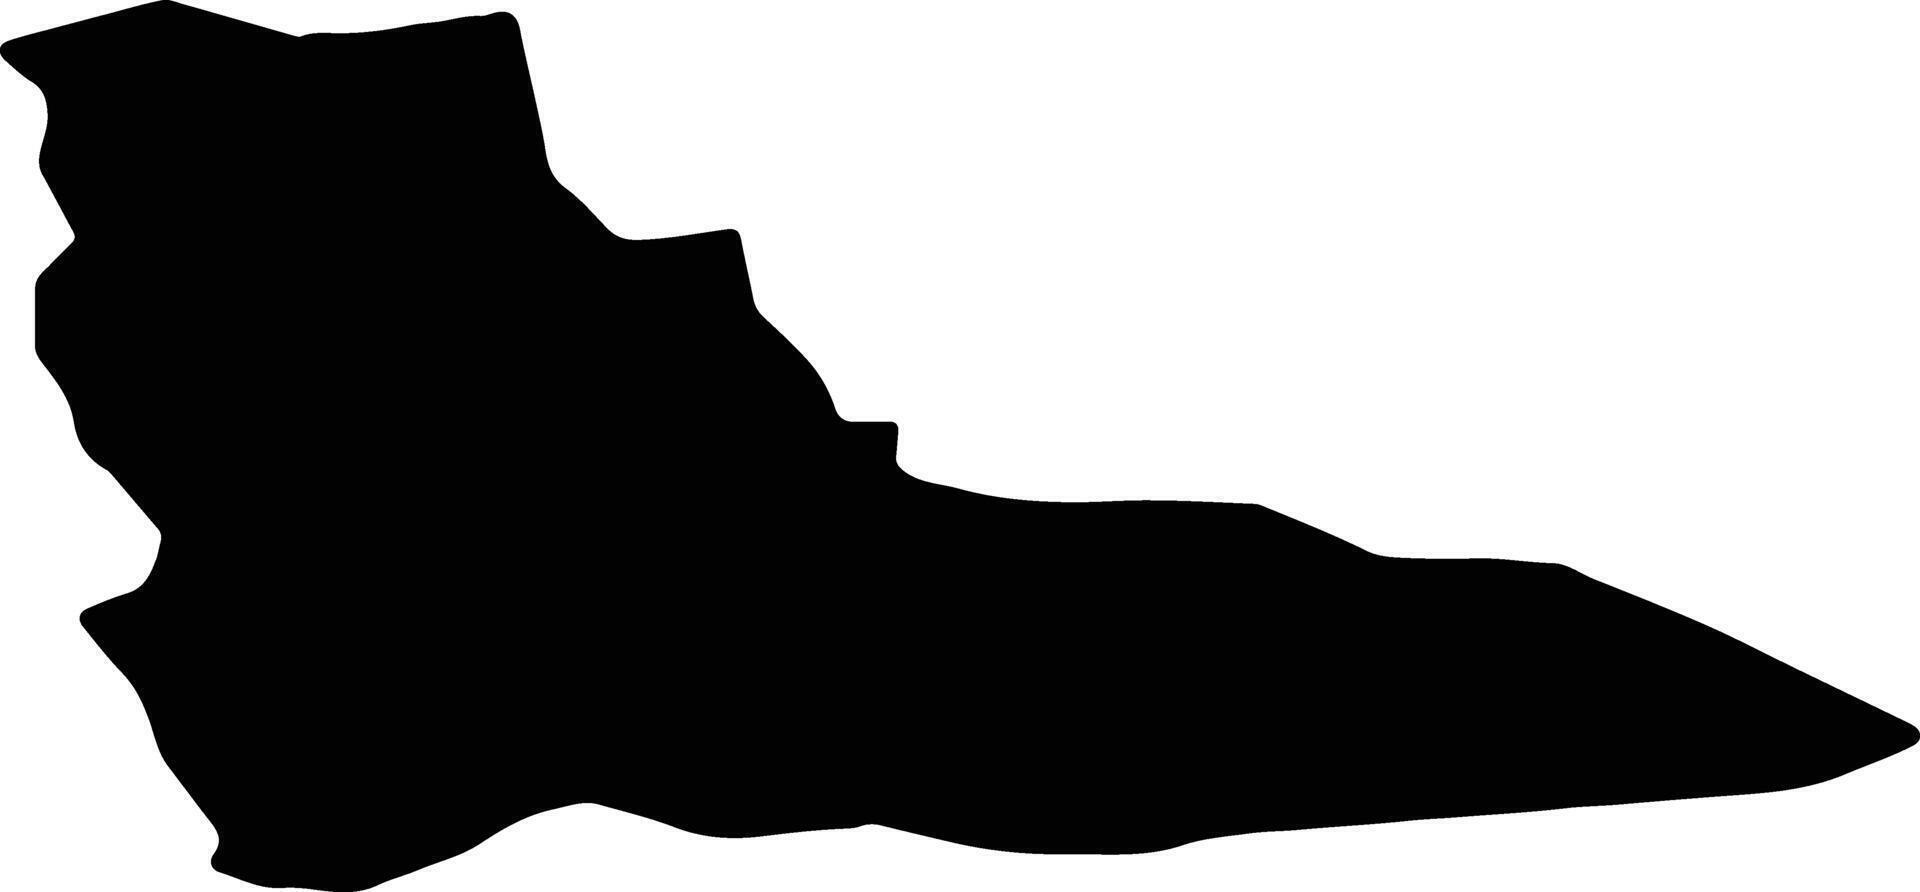 Kamnik Slovenia silhouette map vector